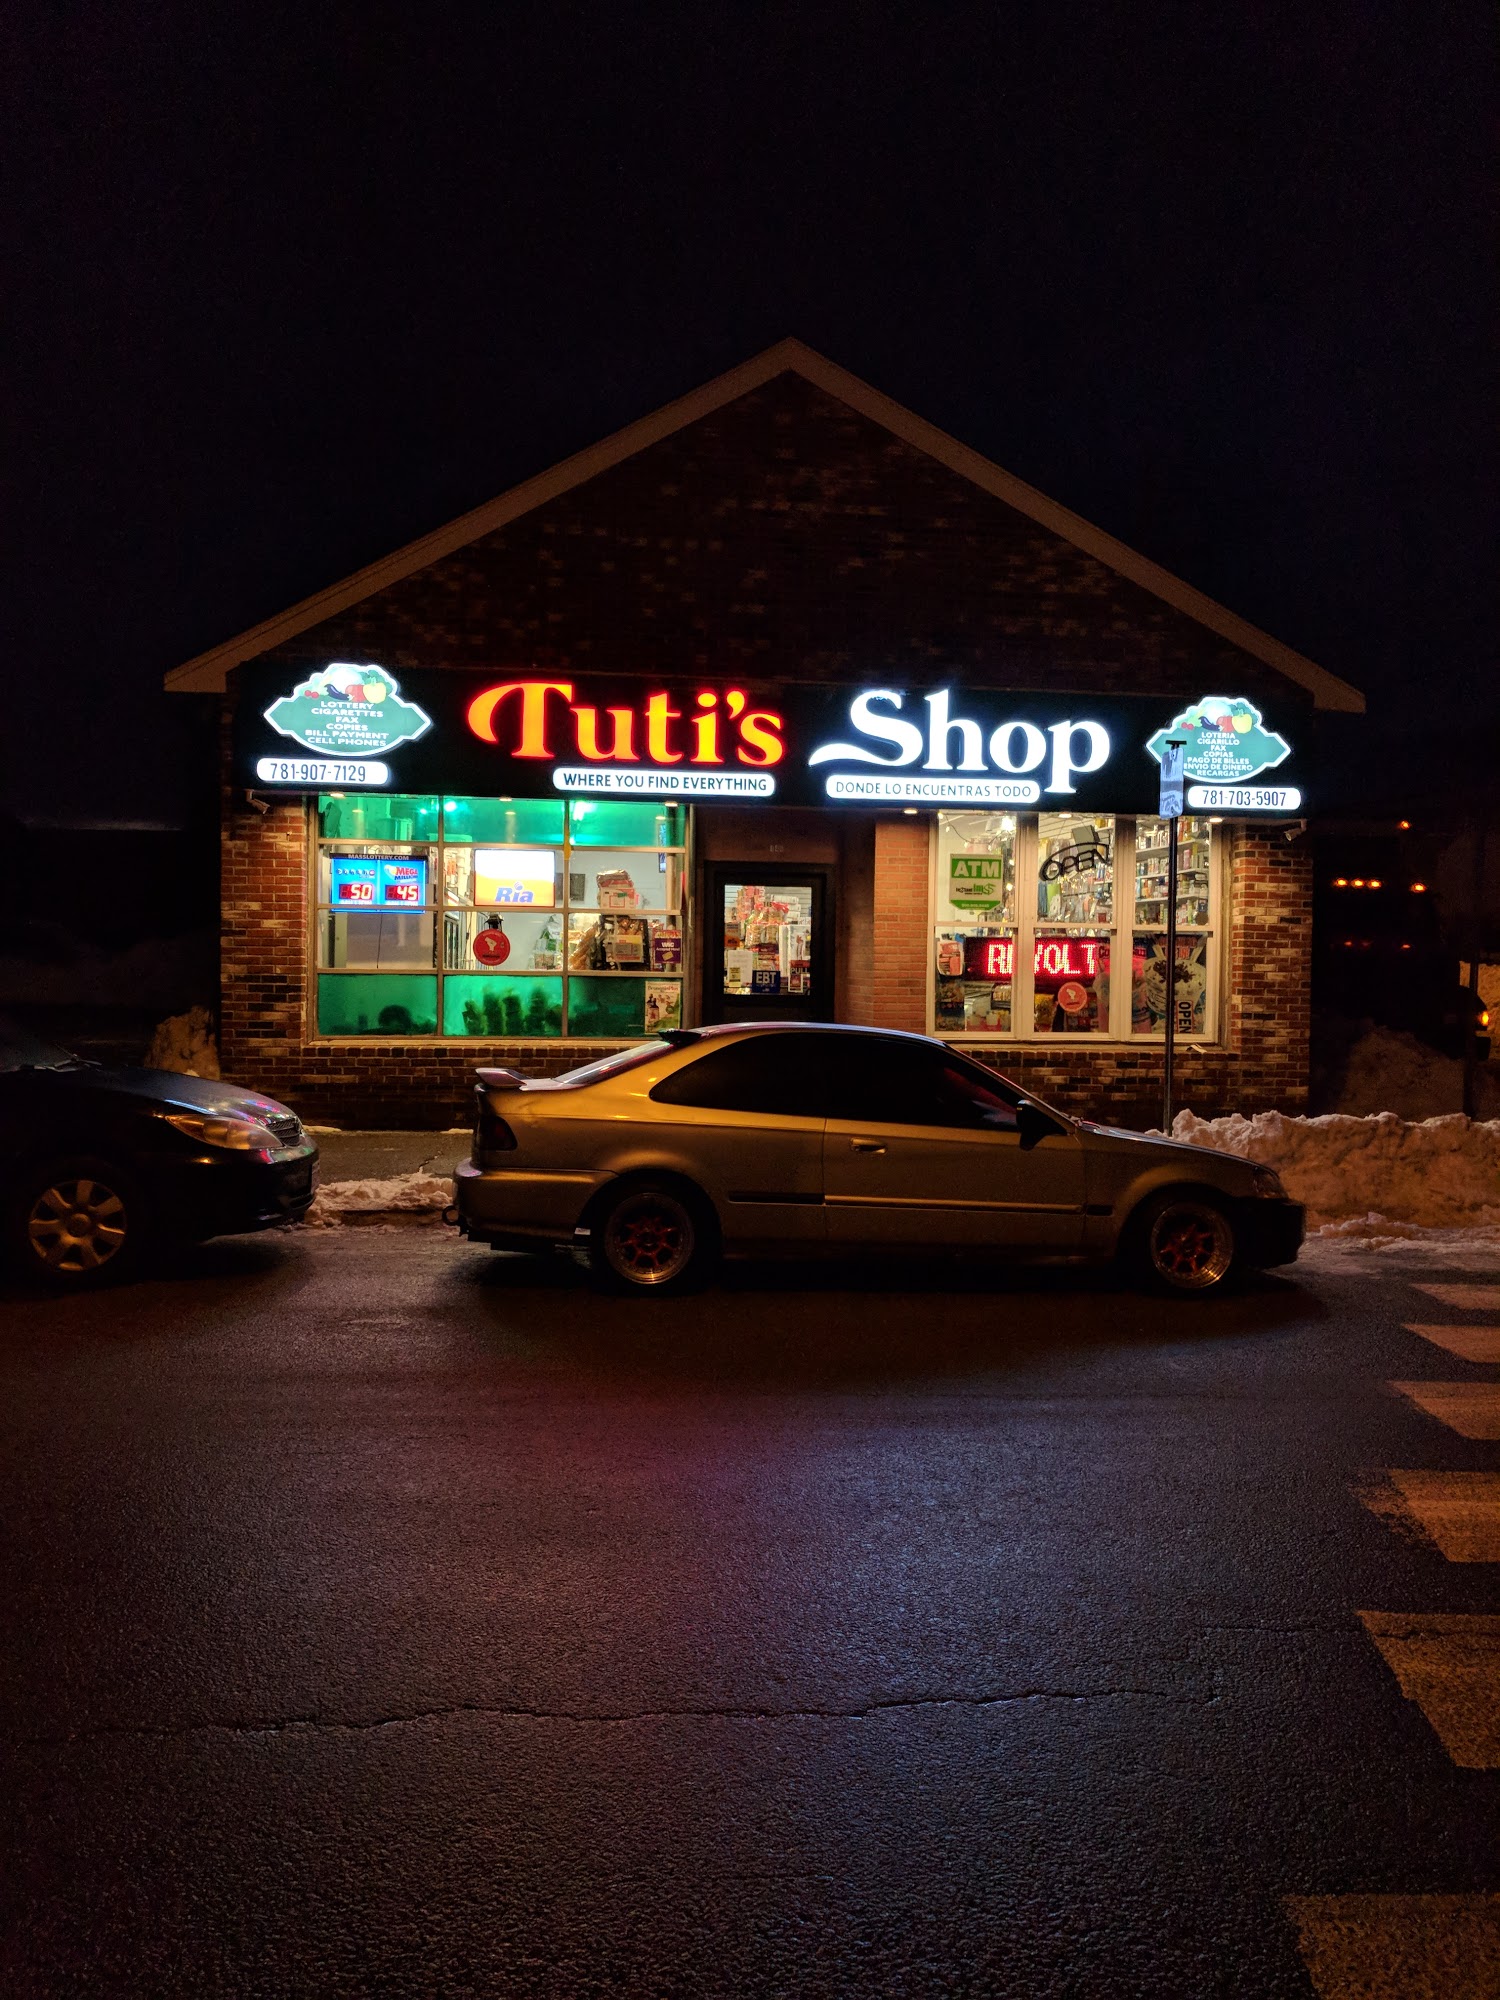 Tuti's Shop